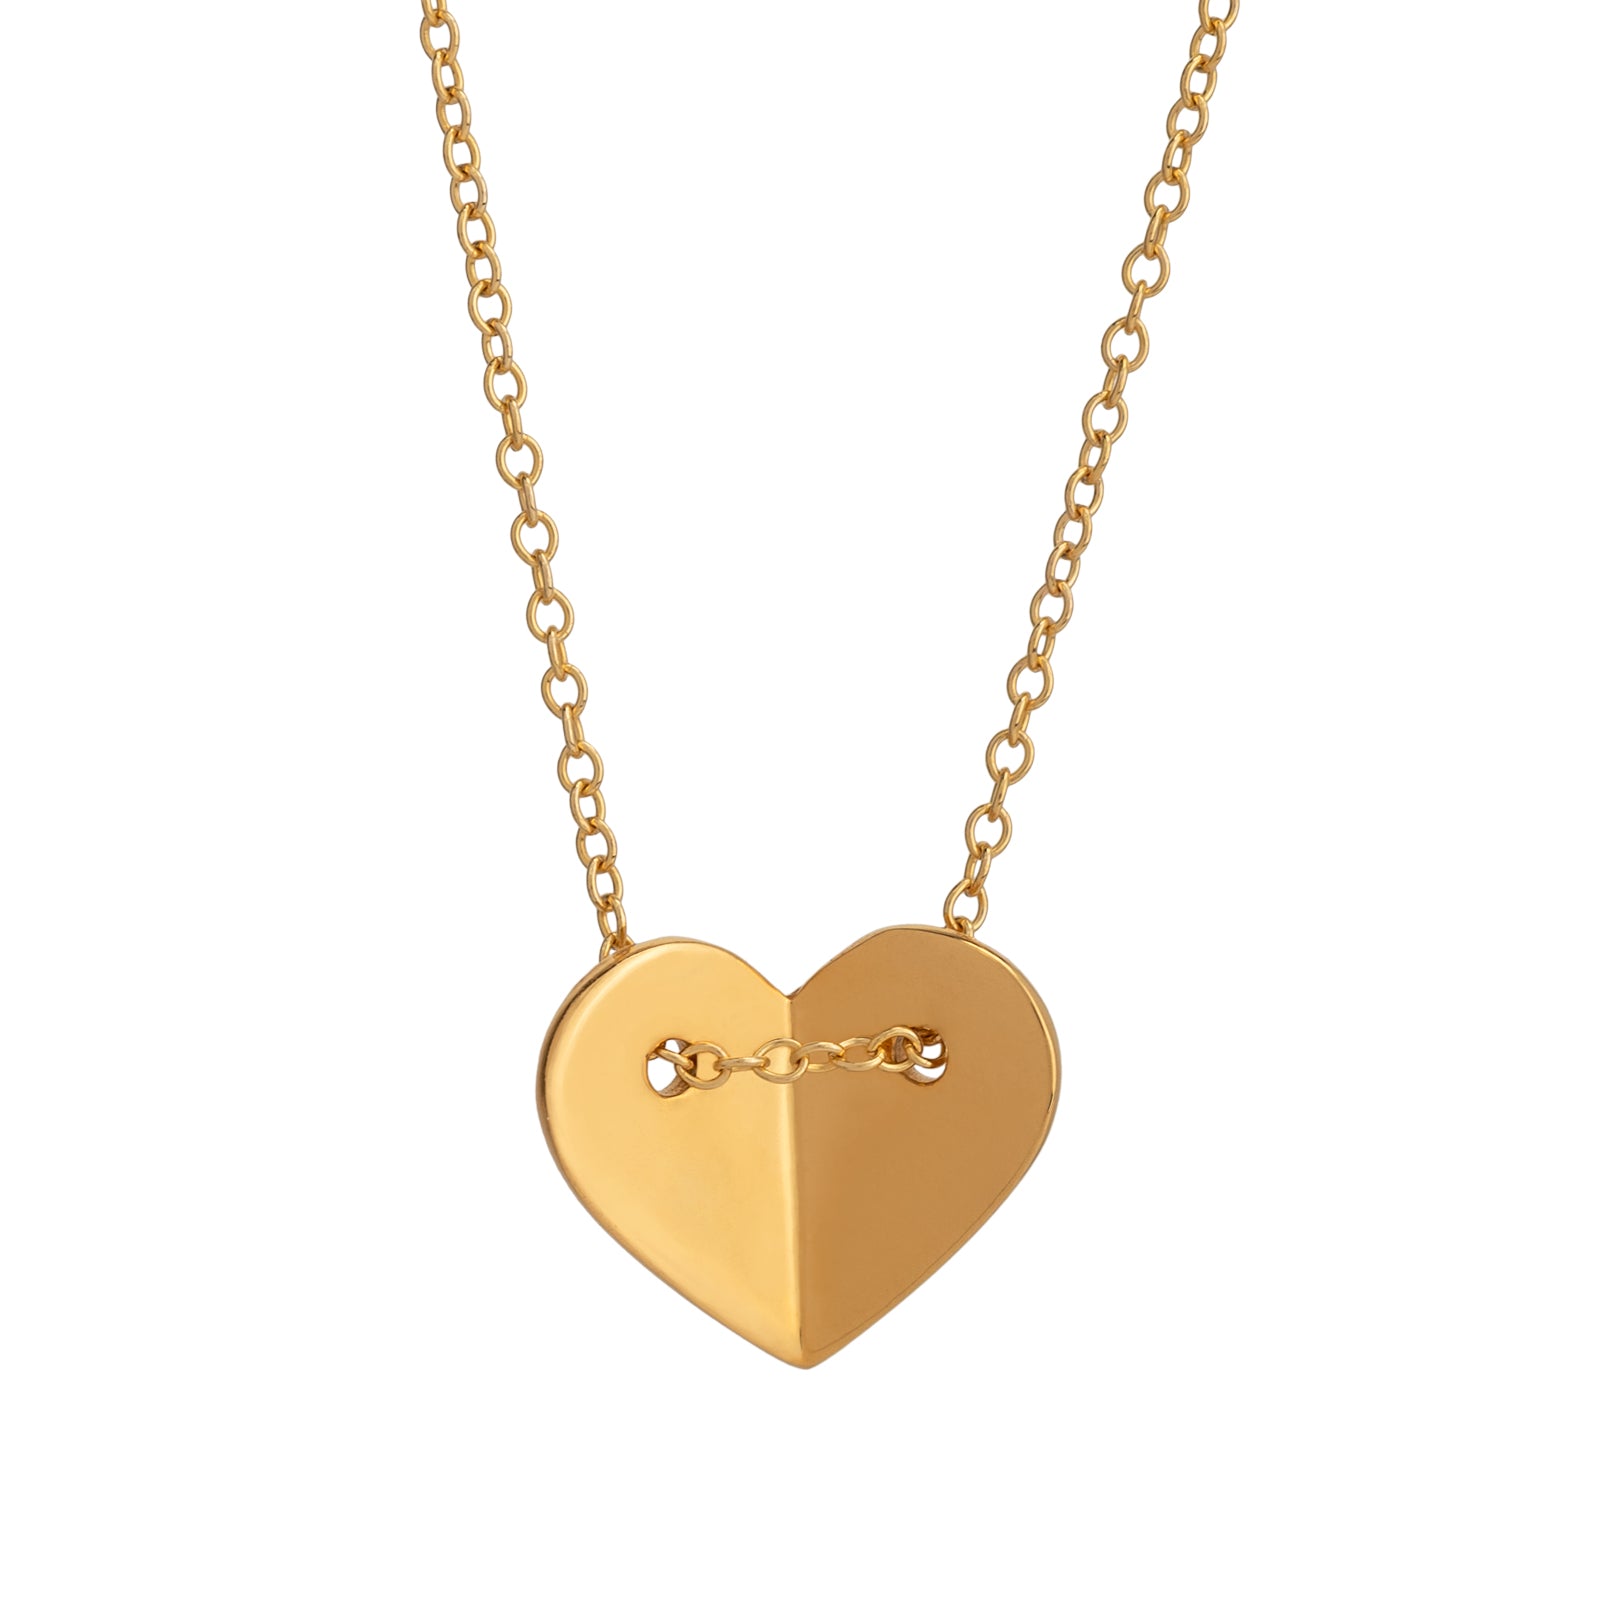 fluttering happy heart necklace plain gold filled